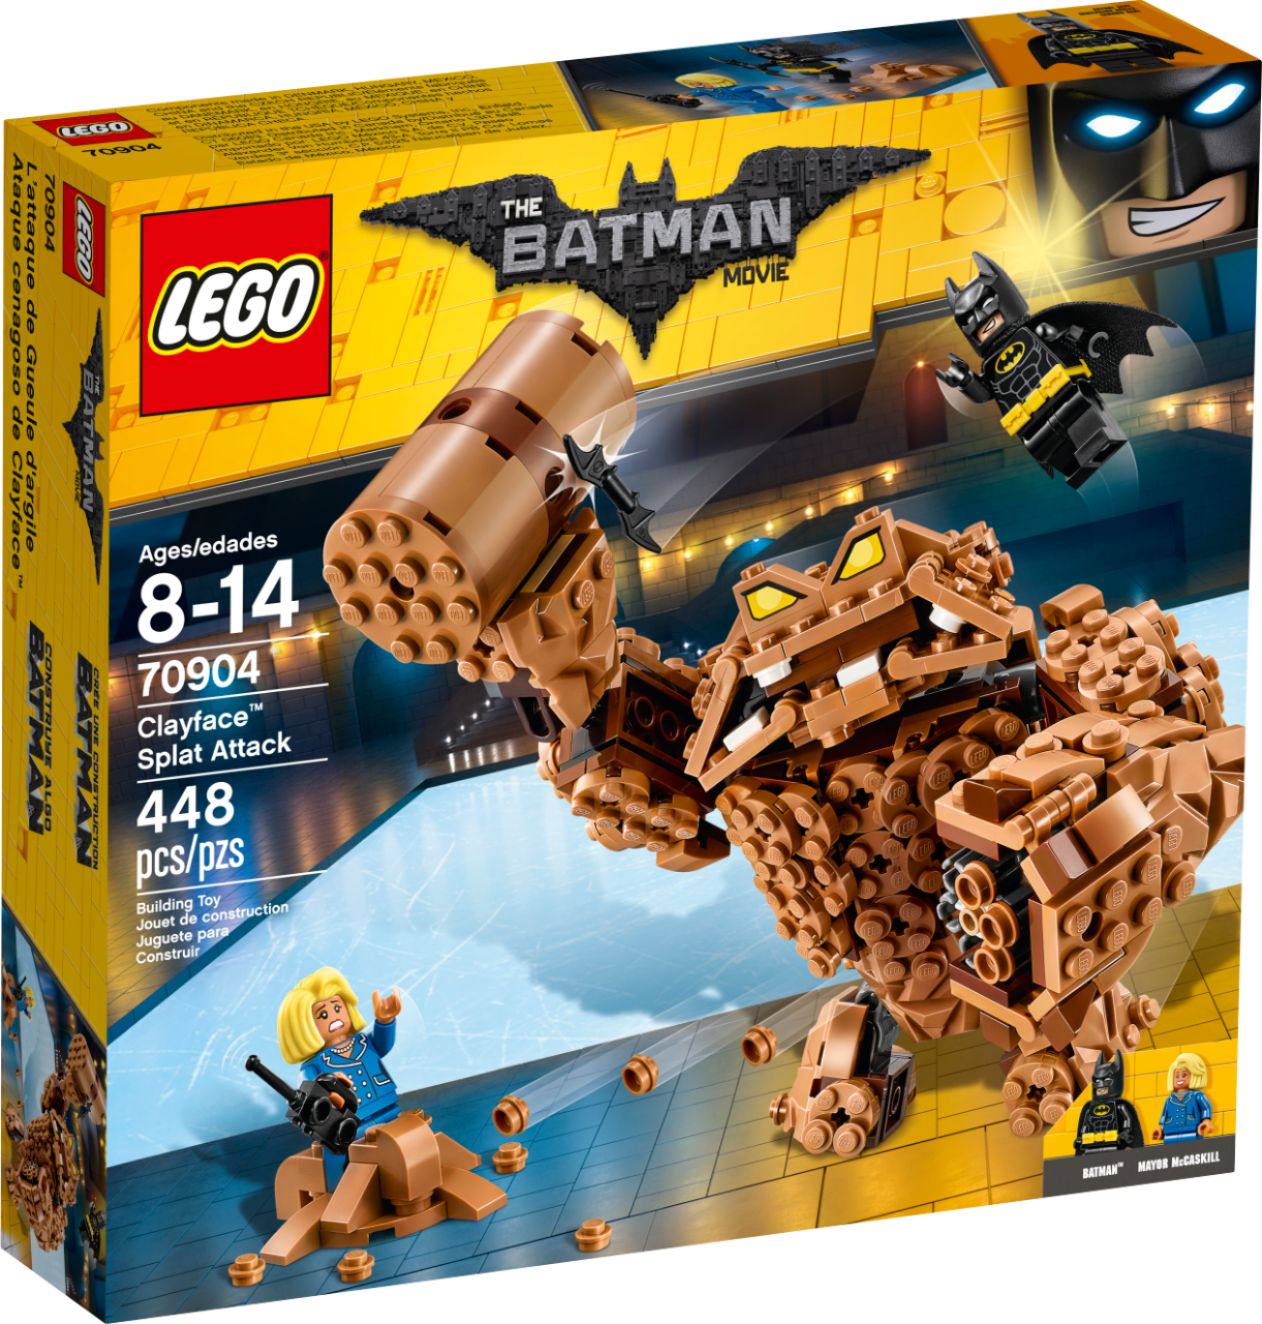 Holy LEGO, Batman! - Chipsworld Corporate